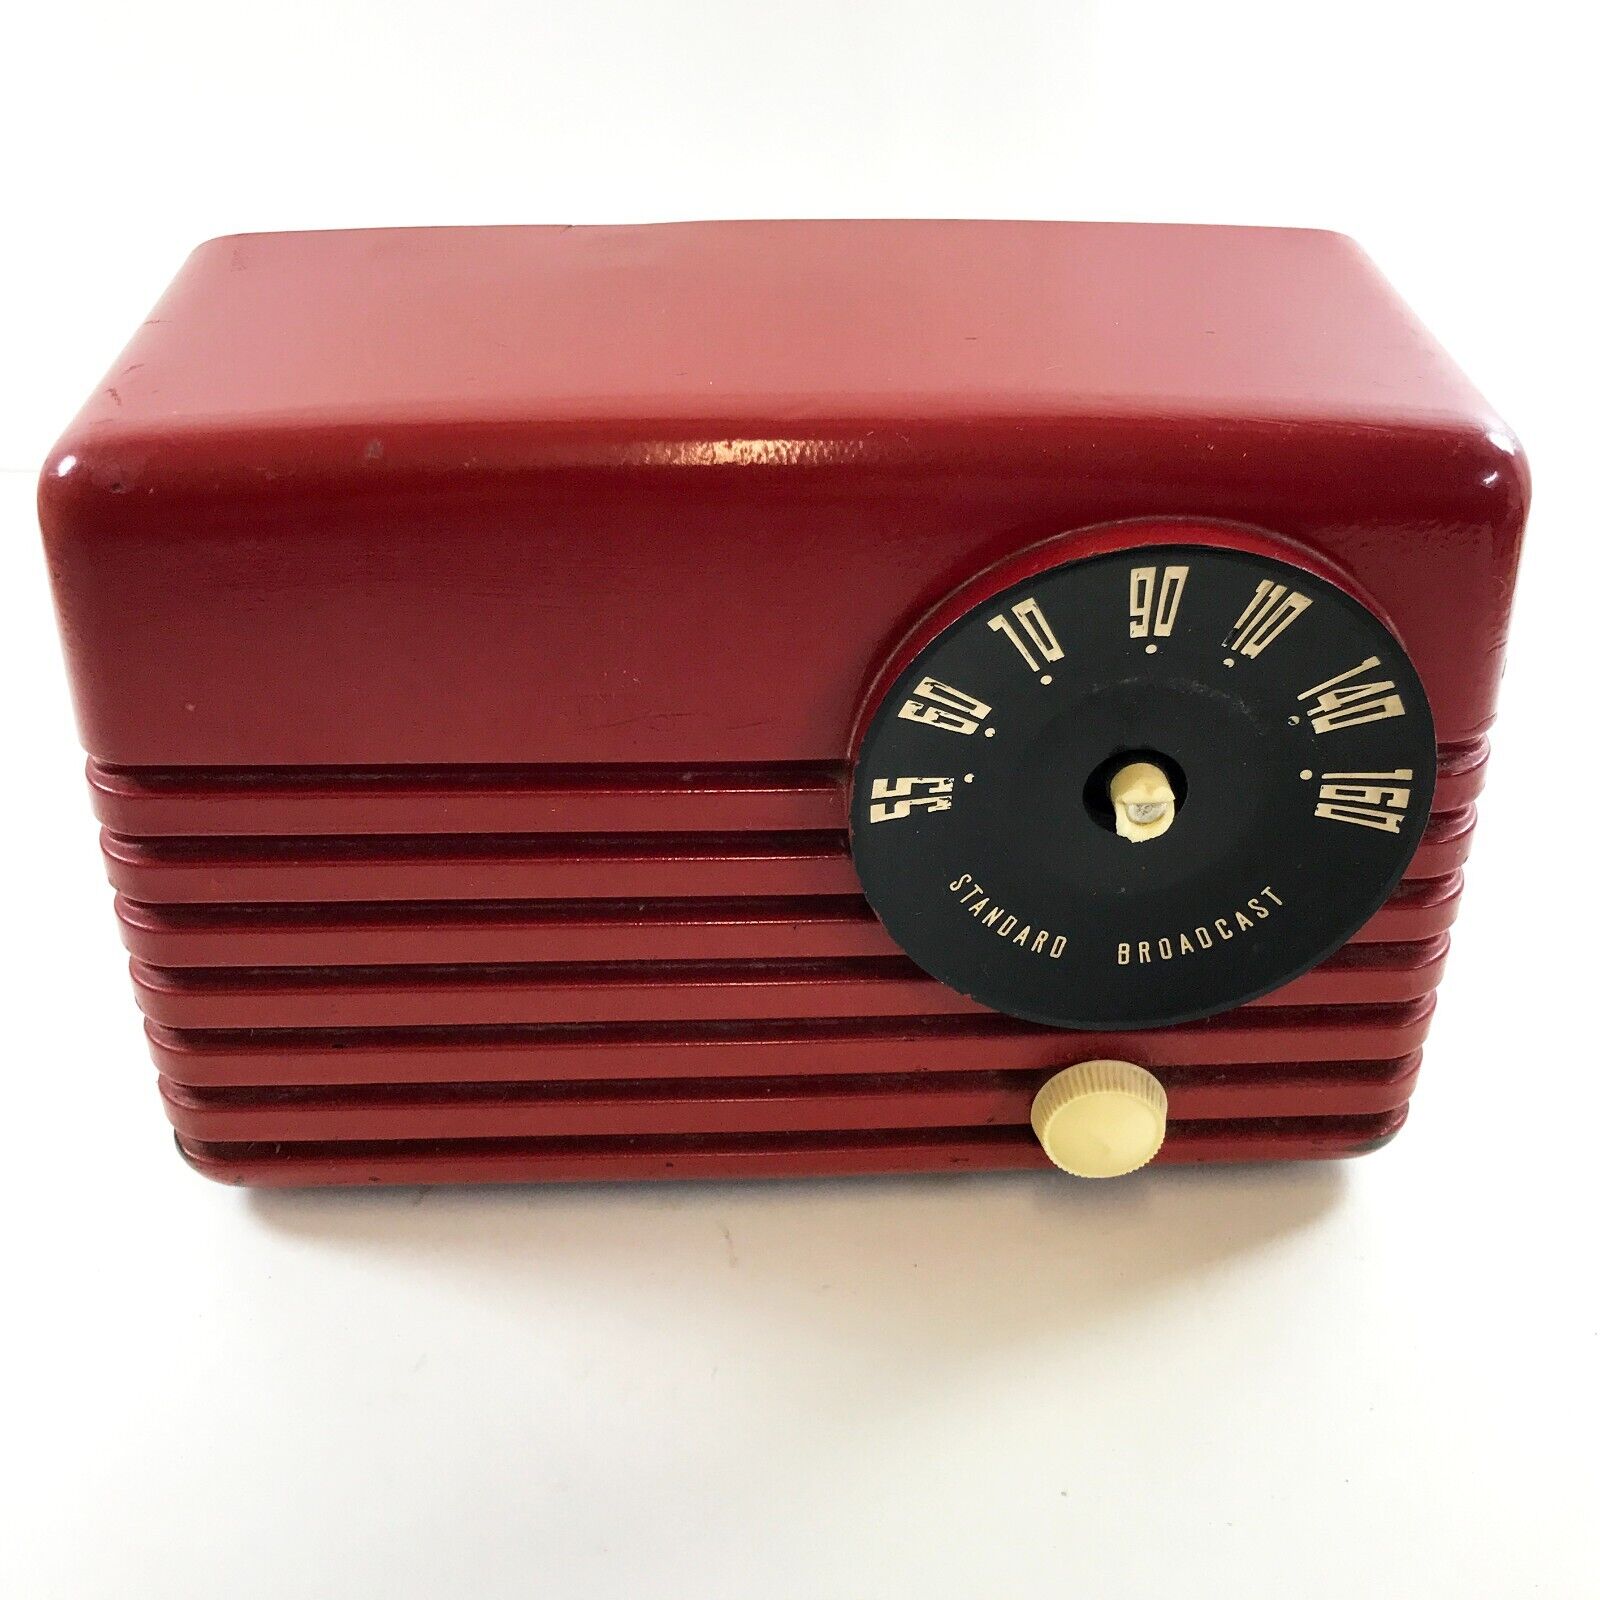 Vintage 1949 Tele-Tone Radio Model 195 RMA No 347 Standard Broadcast for Parts